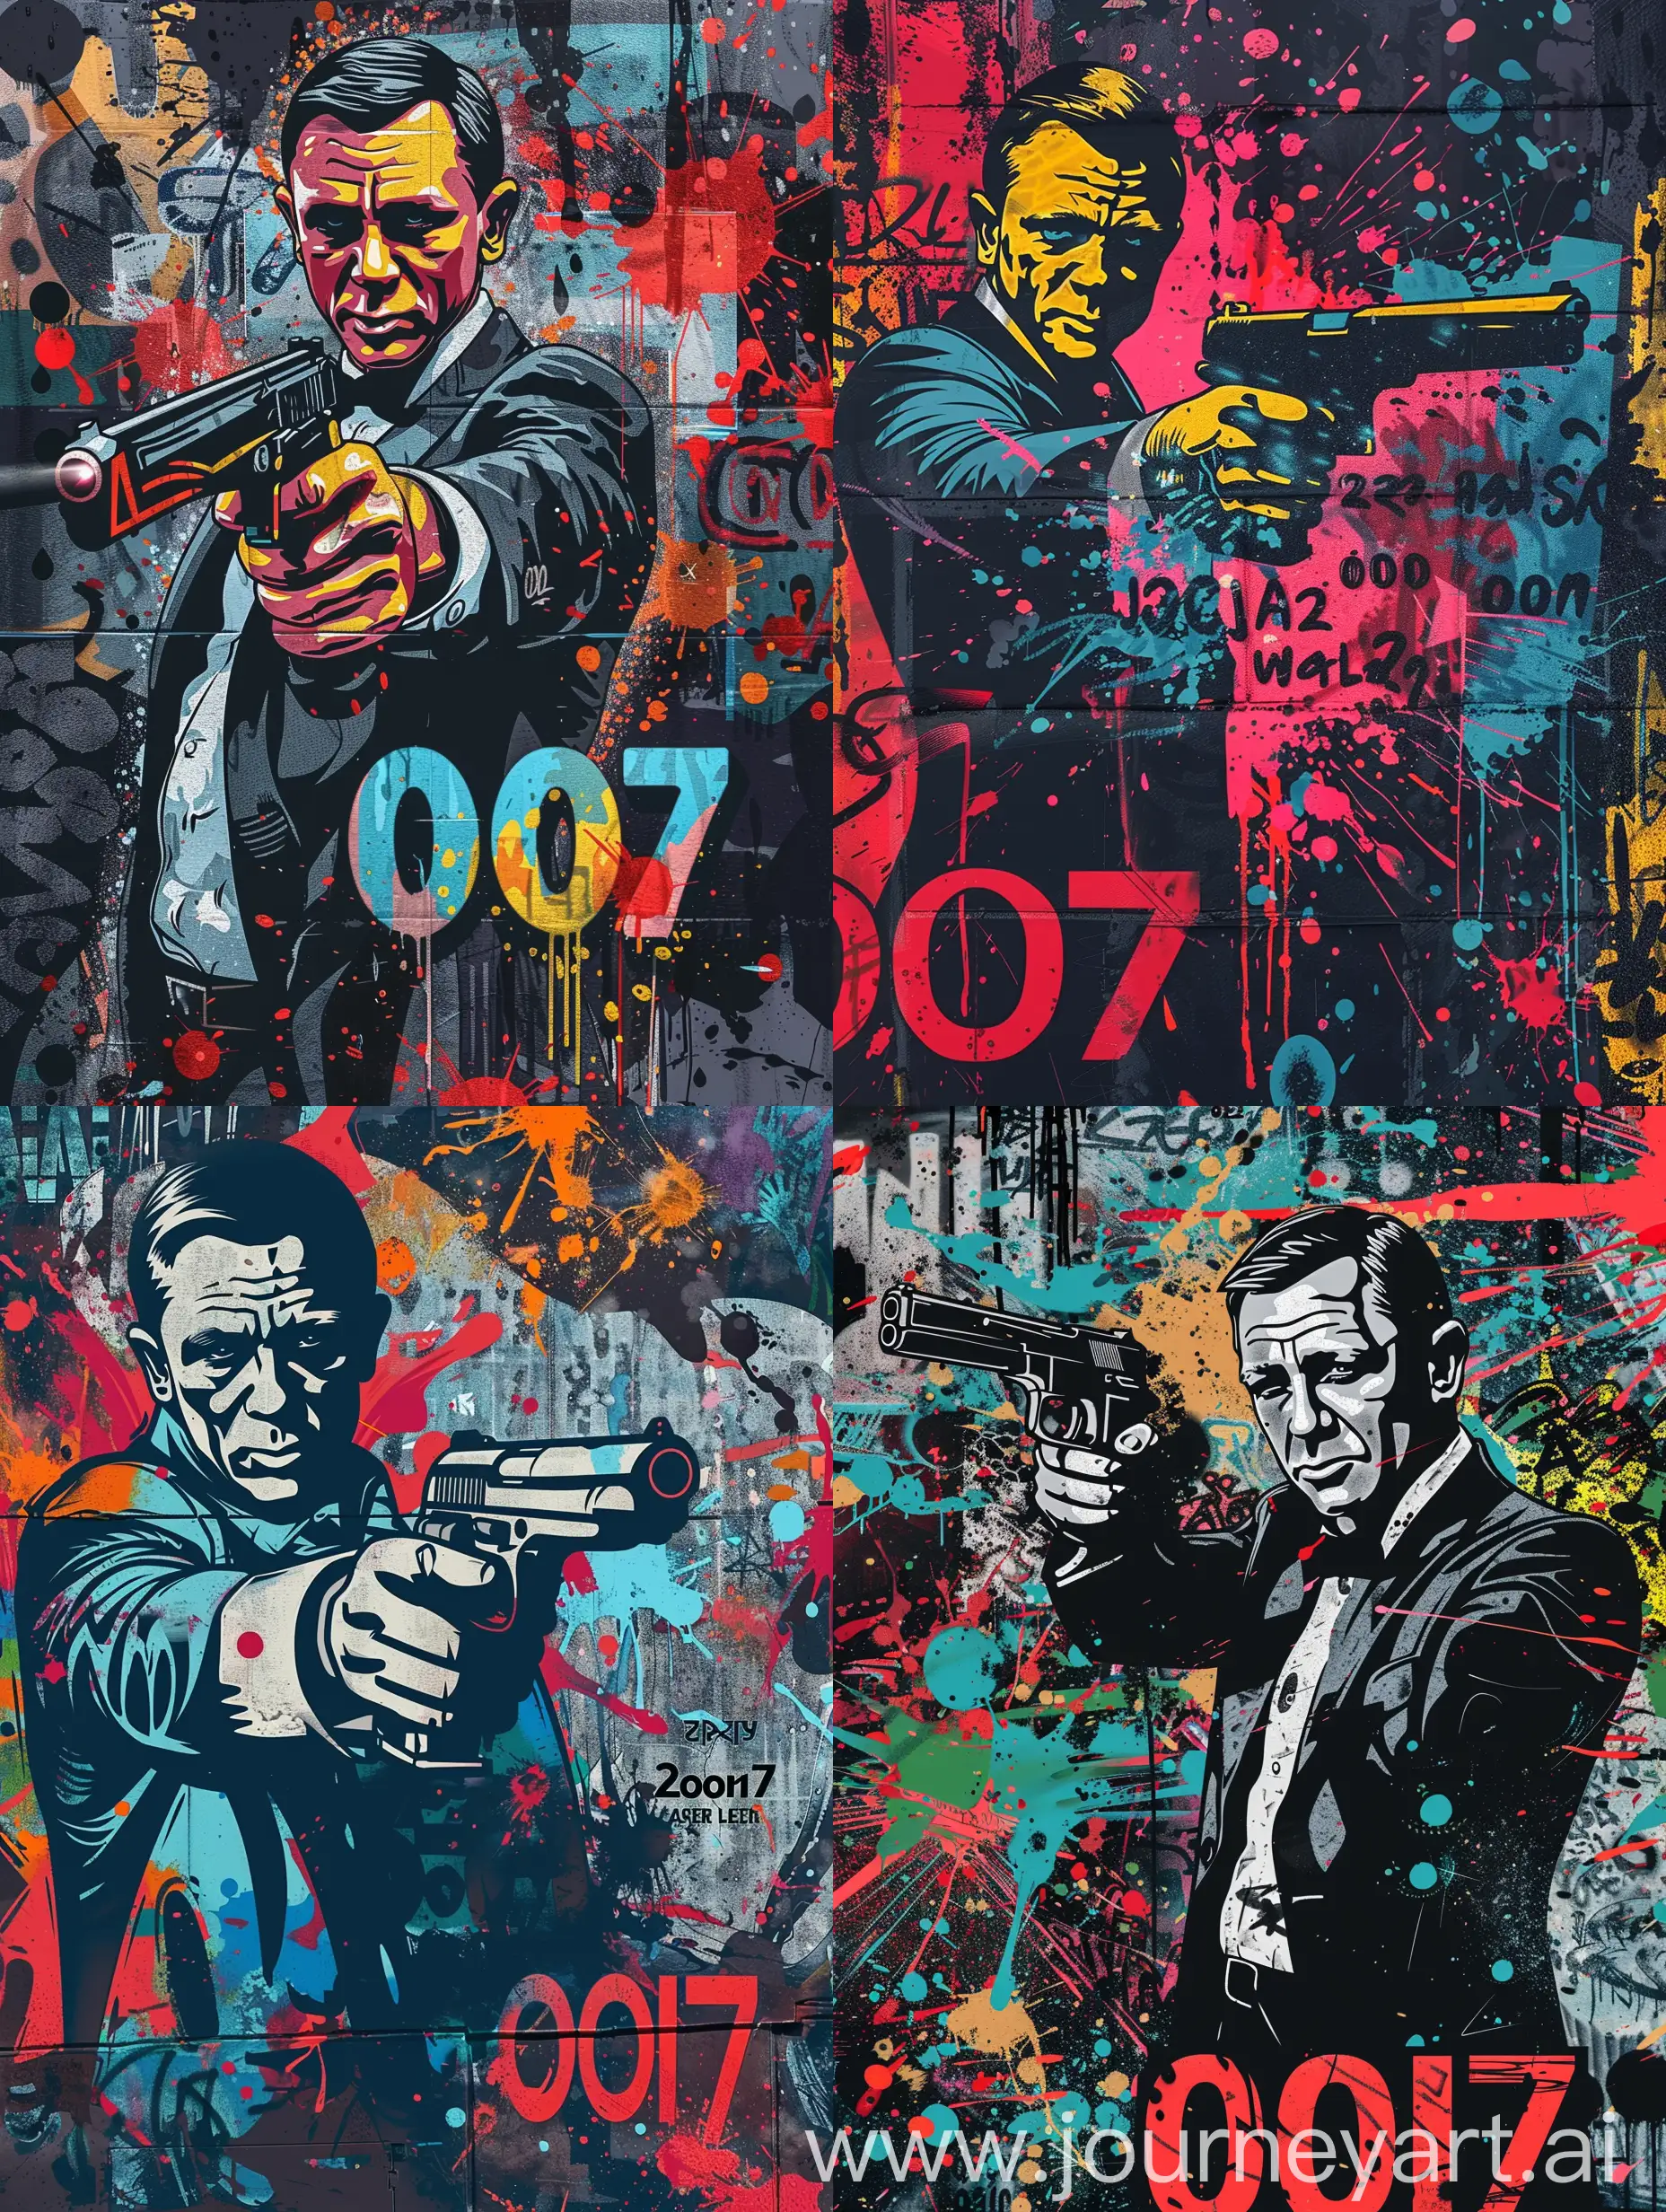 James-Bond-Graffiti-Illustration-Secret-Agent-Holding-Pistol